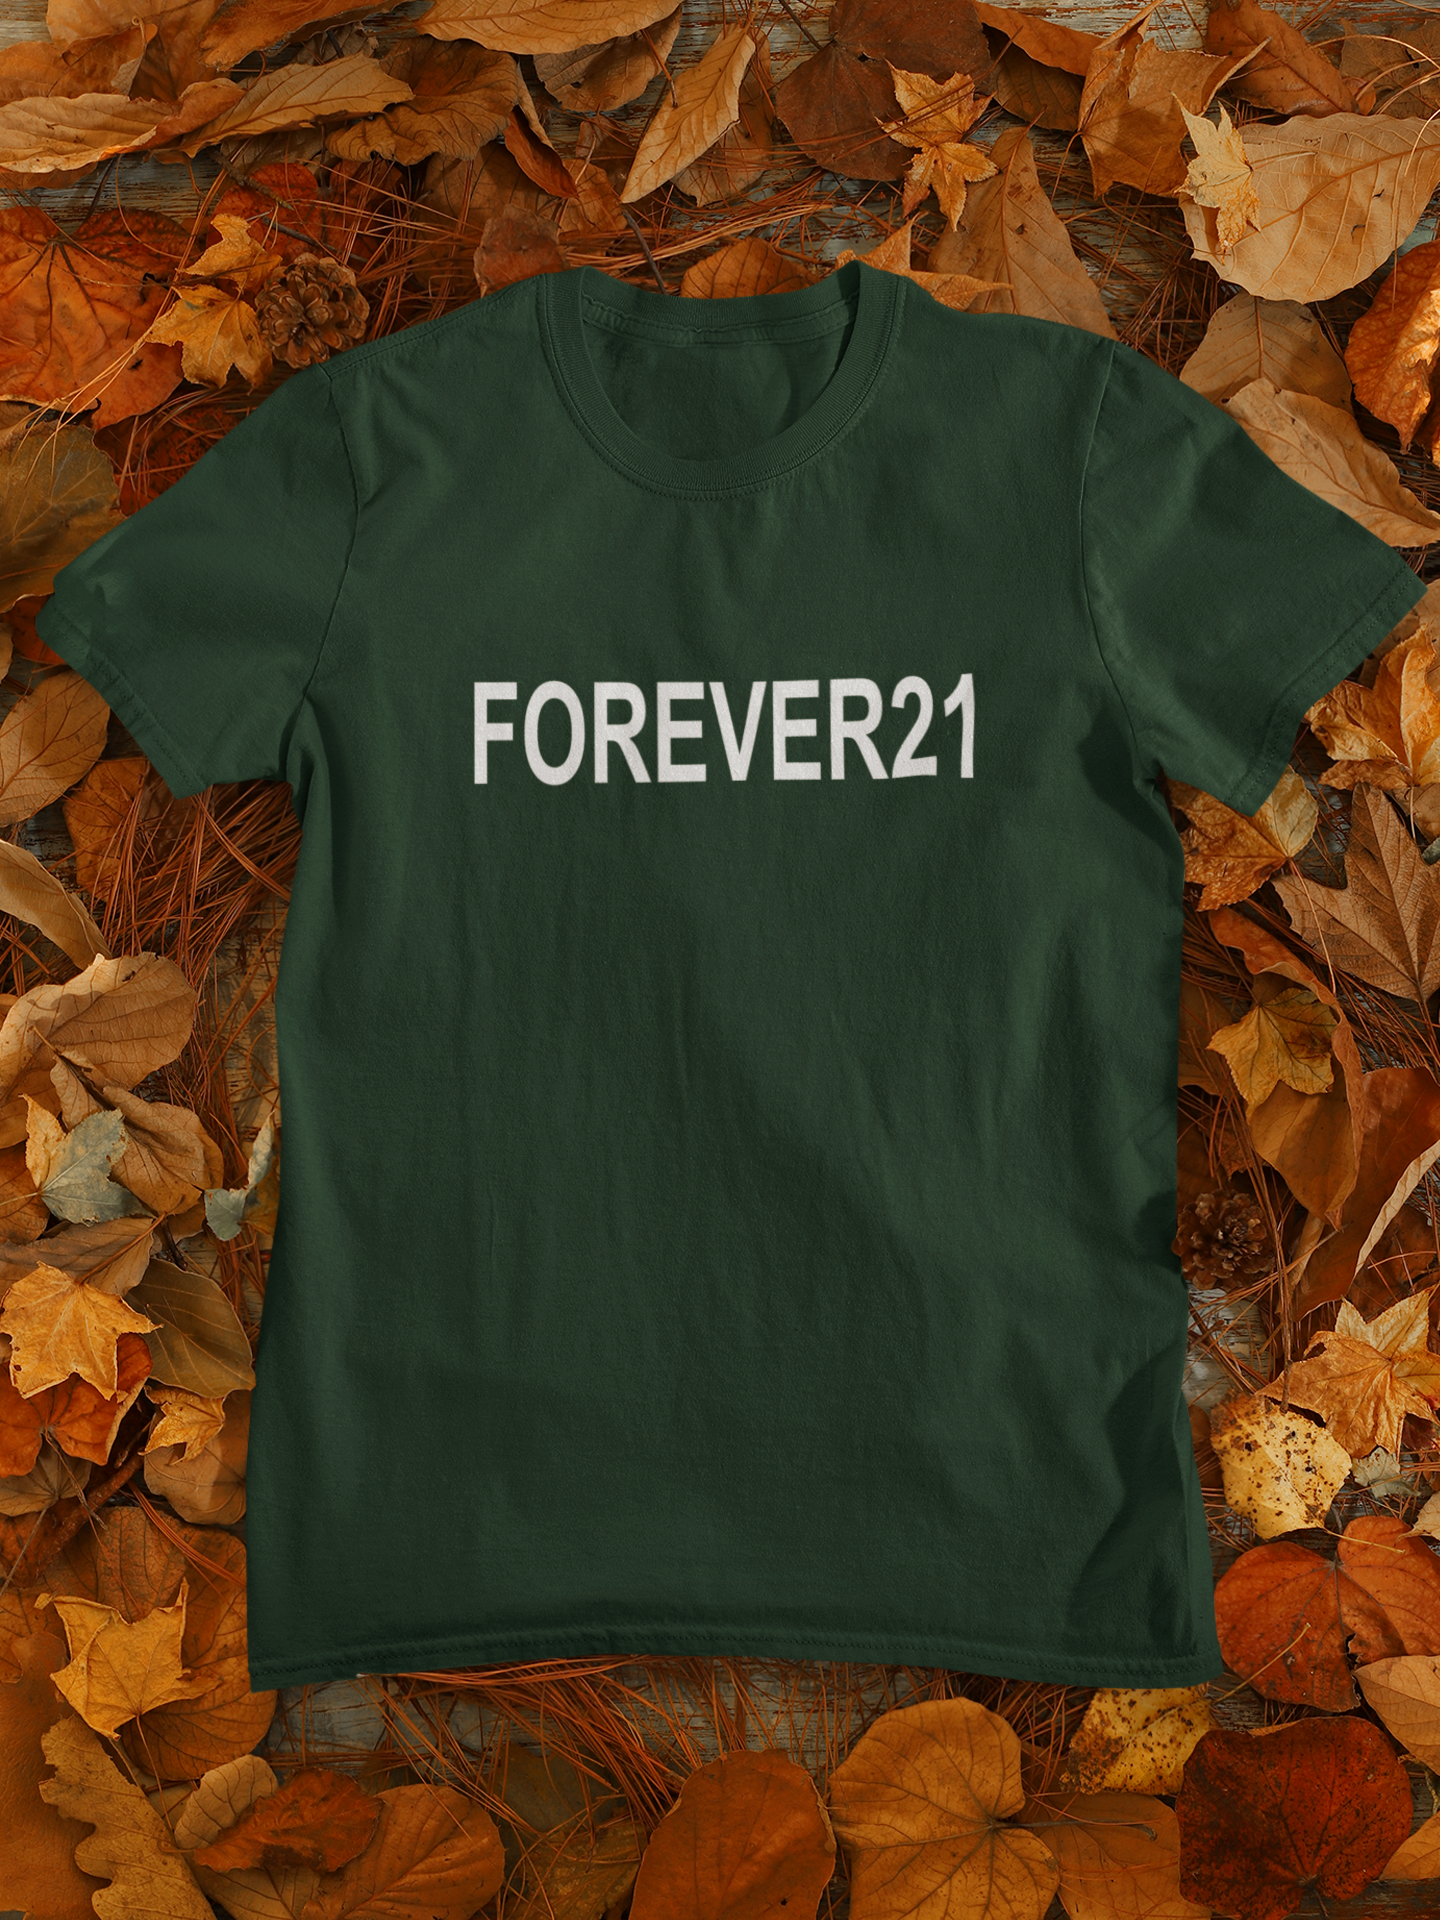 Forever21 Arishfa Khan Celebrity T-shirt- FunkyTeesClub